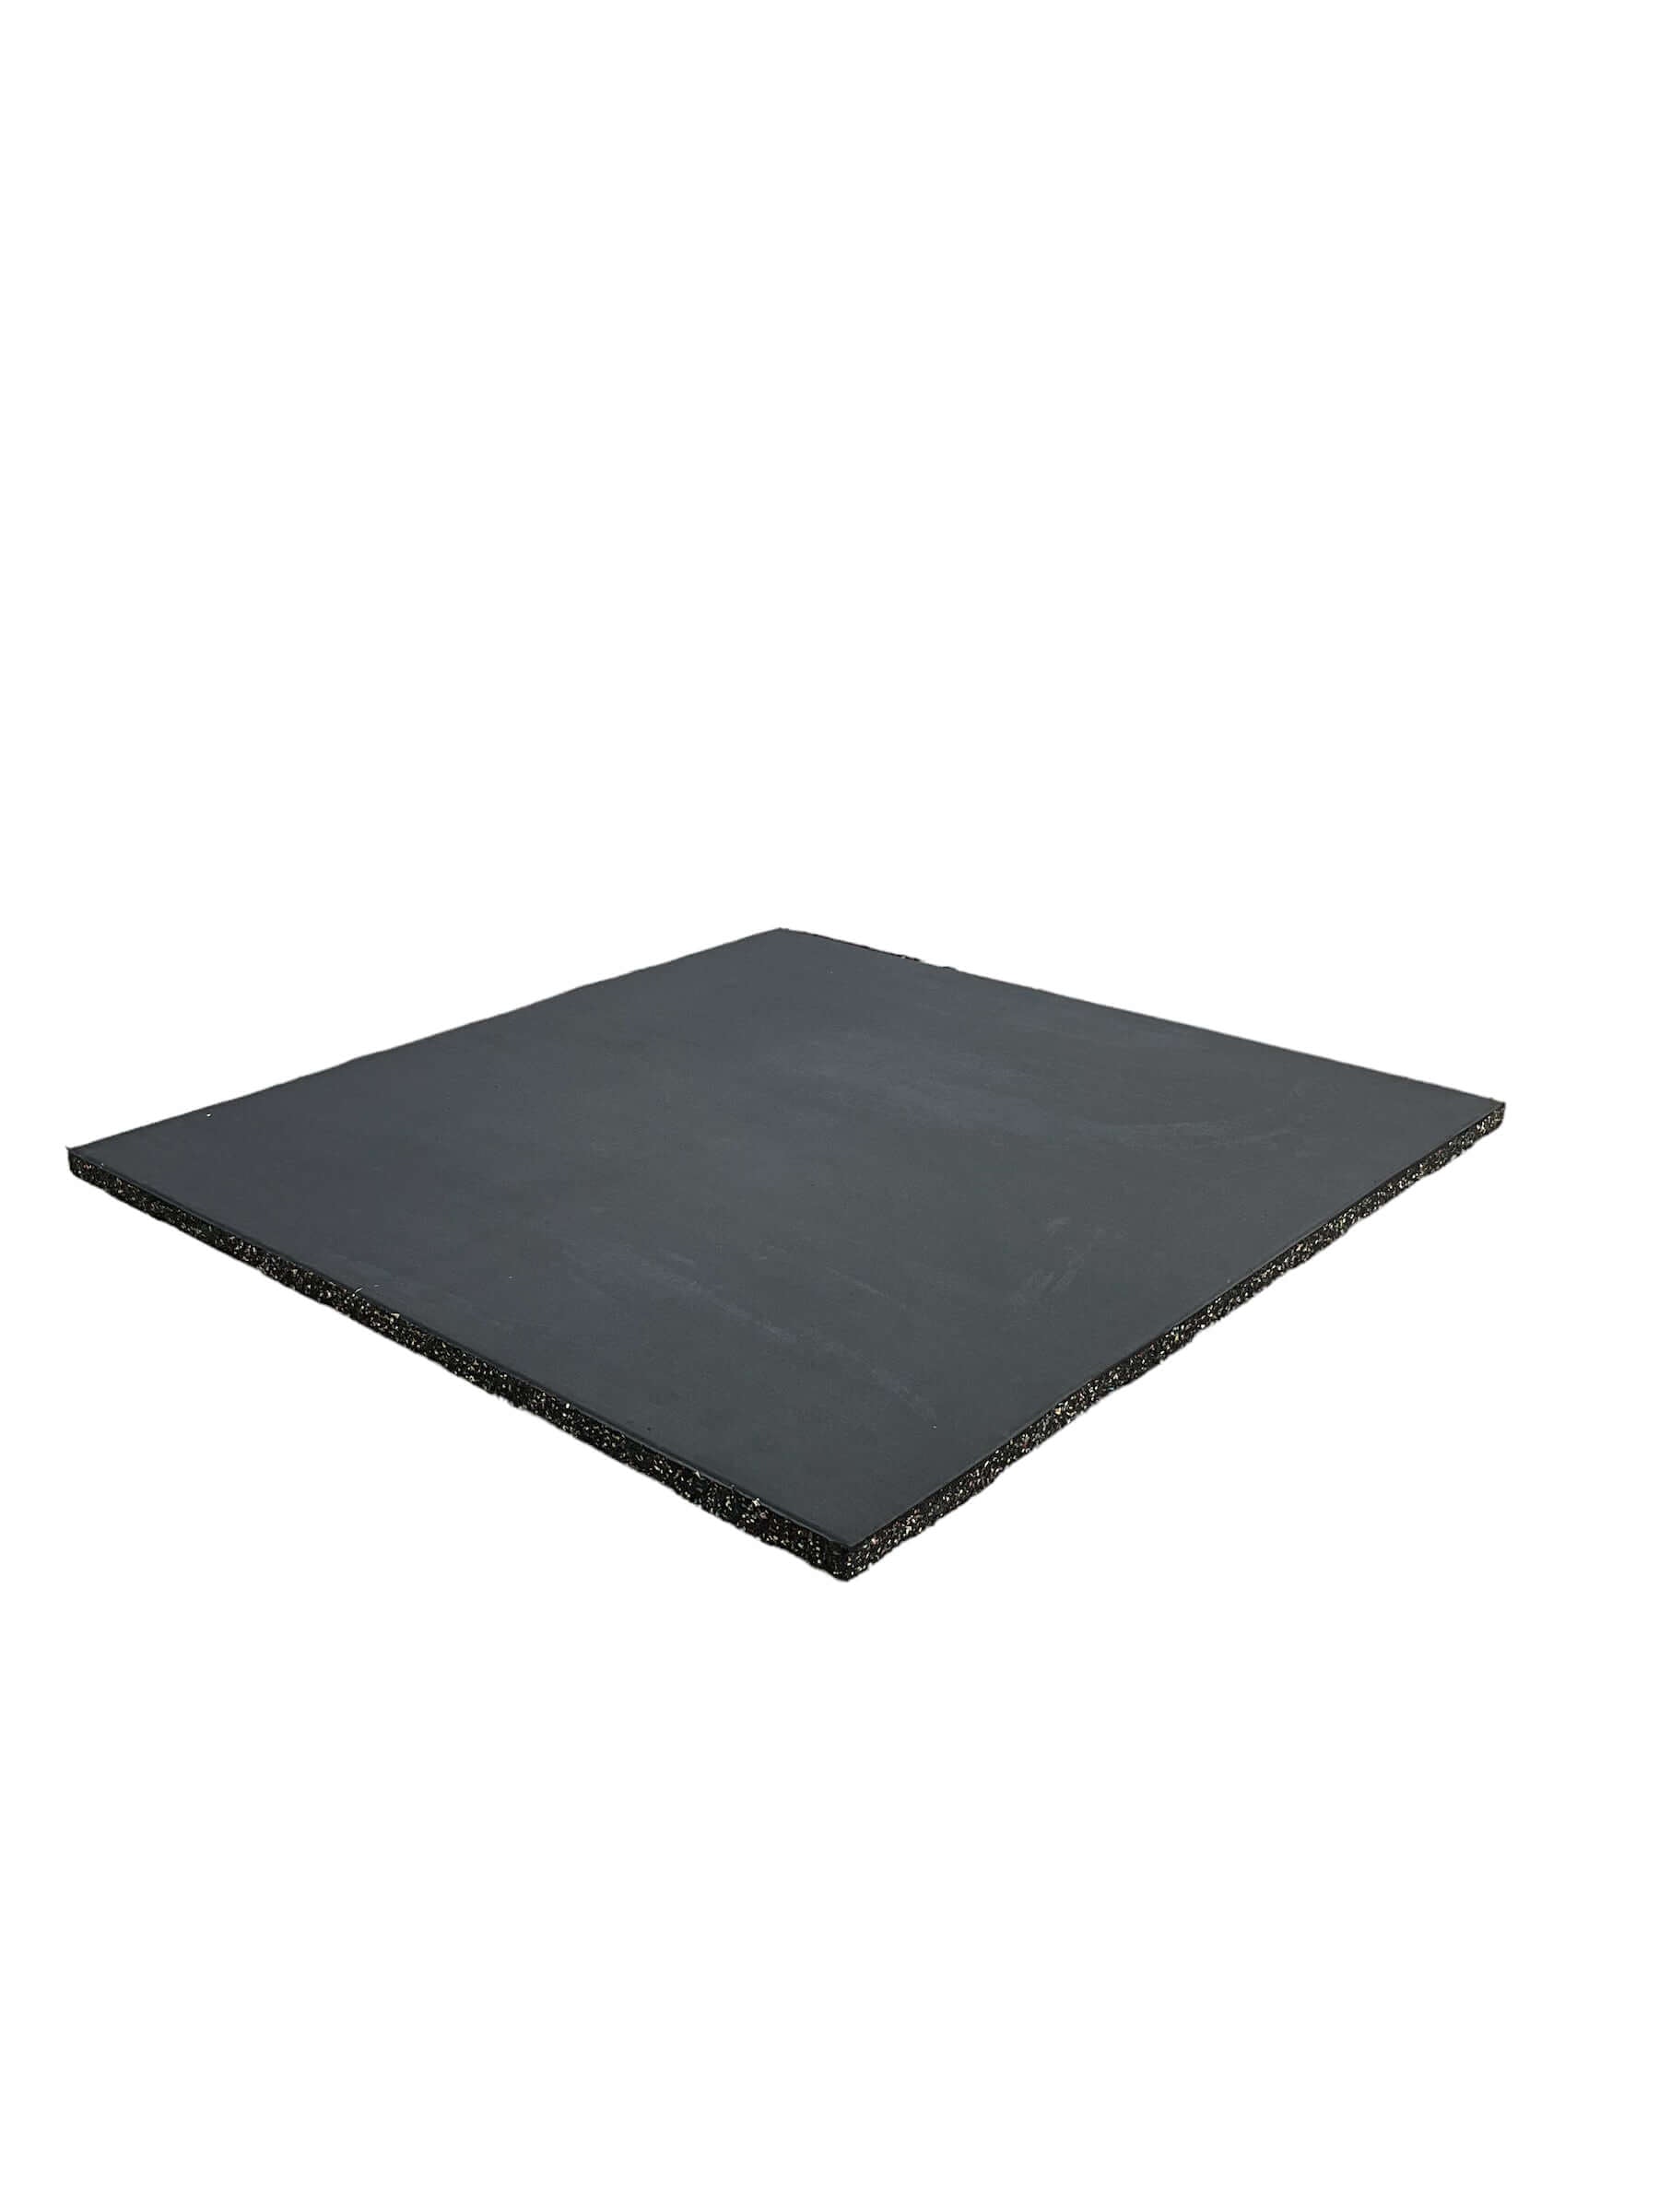 Pack of 100 - 30mm Rubber Gym Flooring Dual Density EPDM Rubber Dense Tile Mat 1m x 1m BLACK | INSOURCE